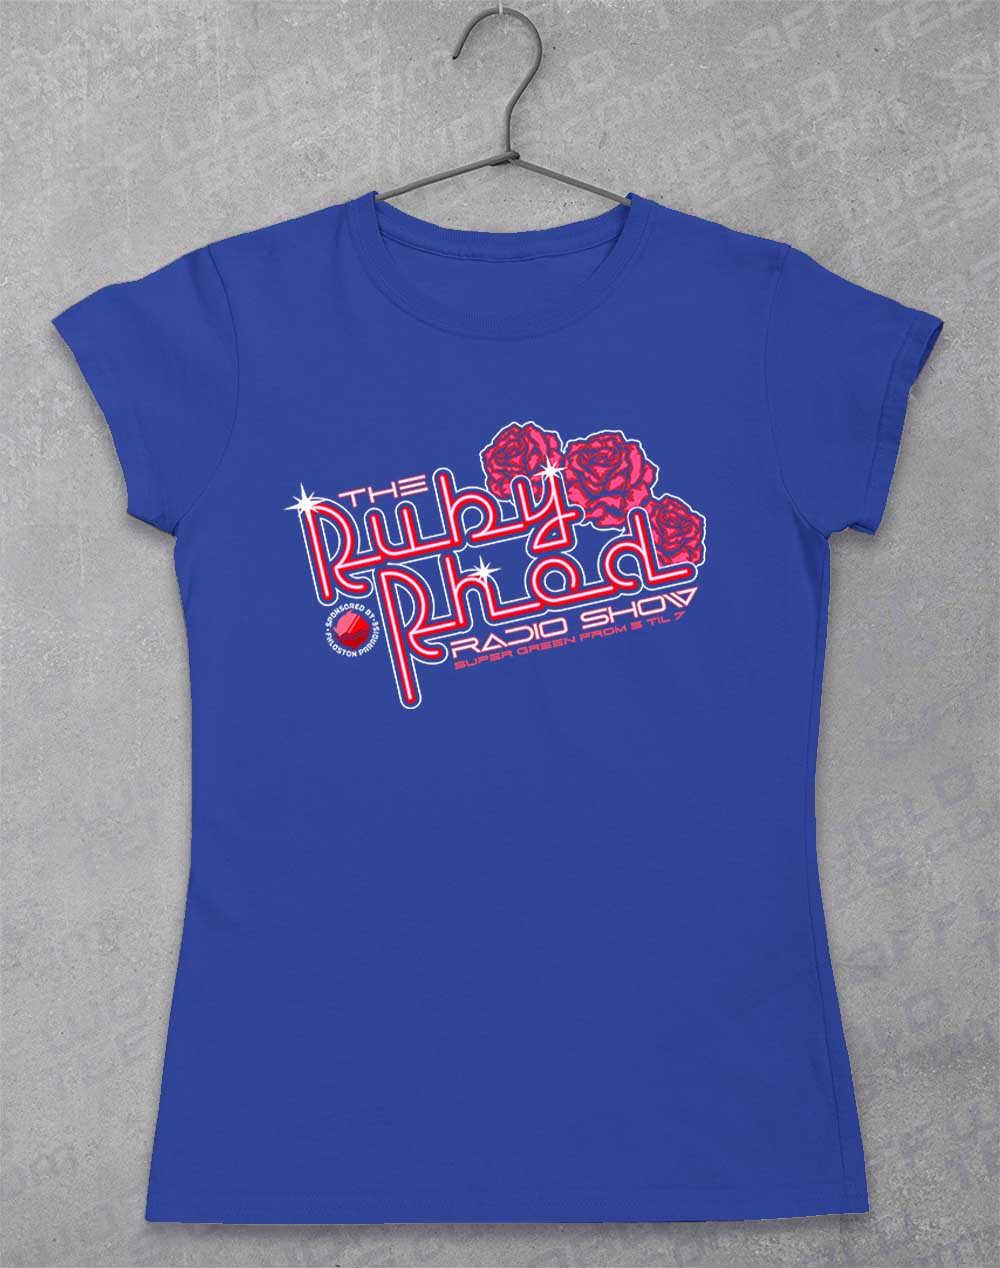 Royal - Ruby Rhod Radio Show Women's T-Shirt